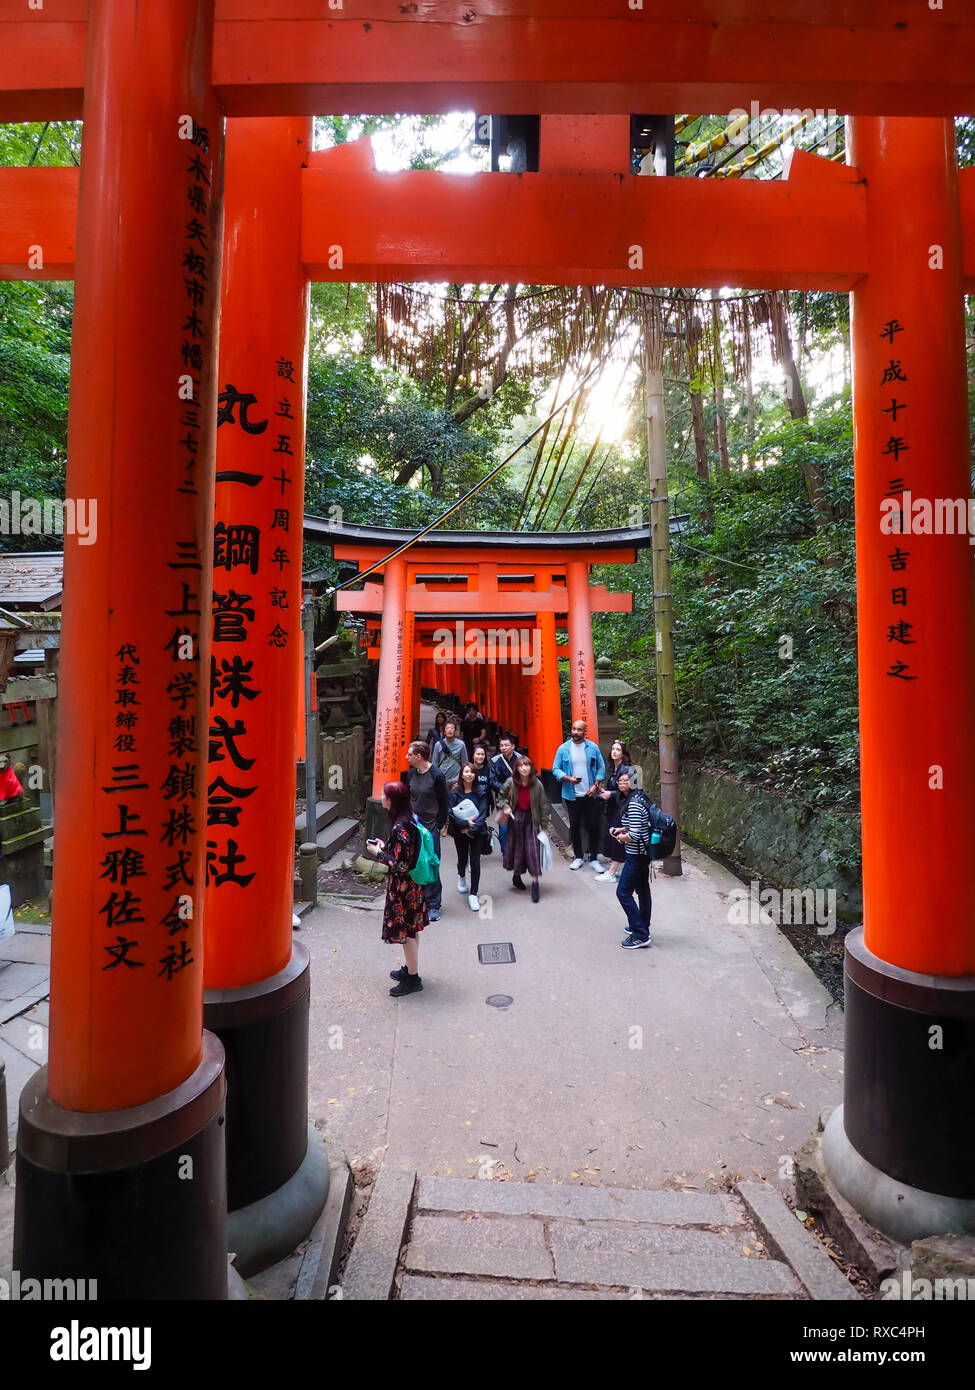 Kyoto, Japon - 13 octobre 2018 : les touristes sont à monter Senbon torii, un chemin d'environ 1 000 portes menant Fushimi Inari Taisha, Kyoto. Banque D'Images